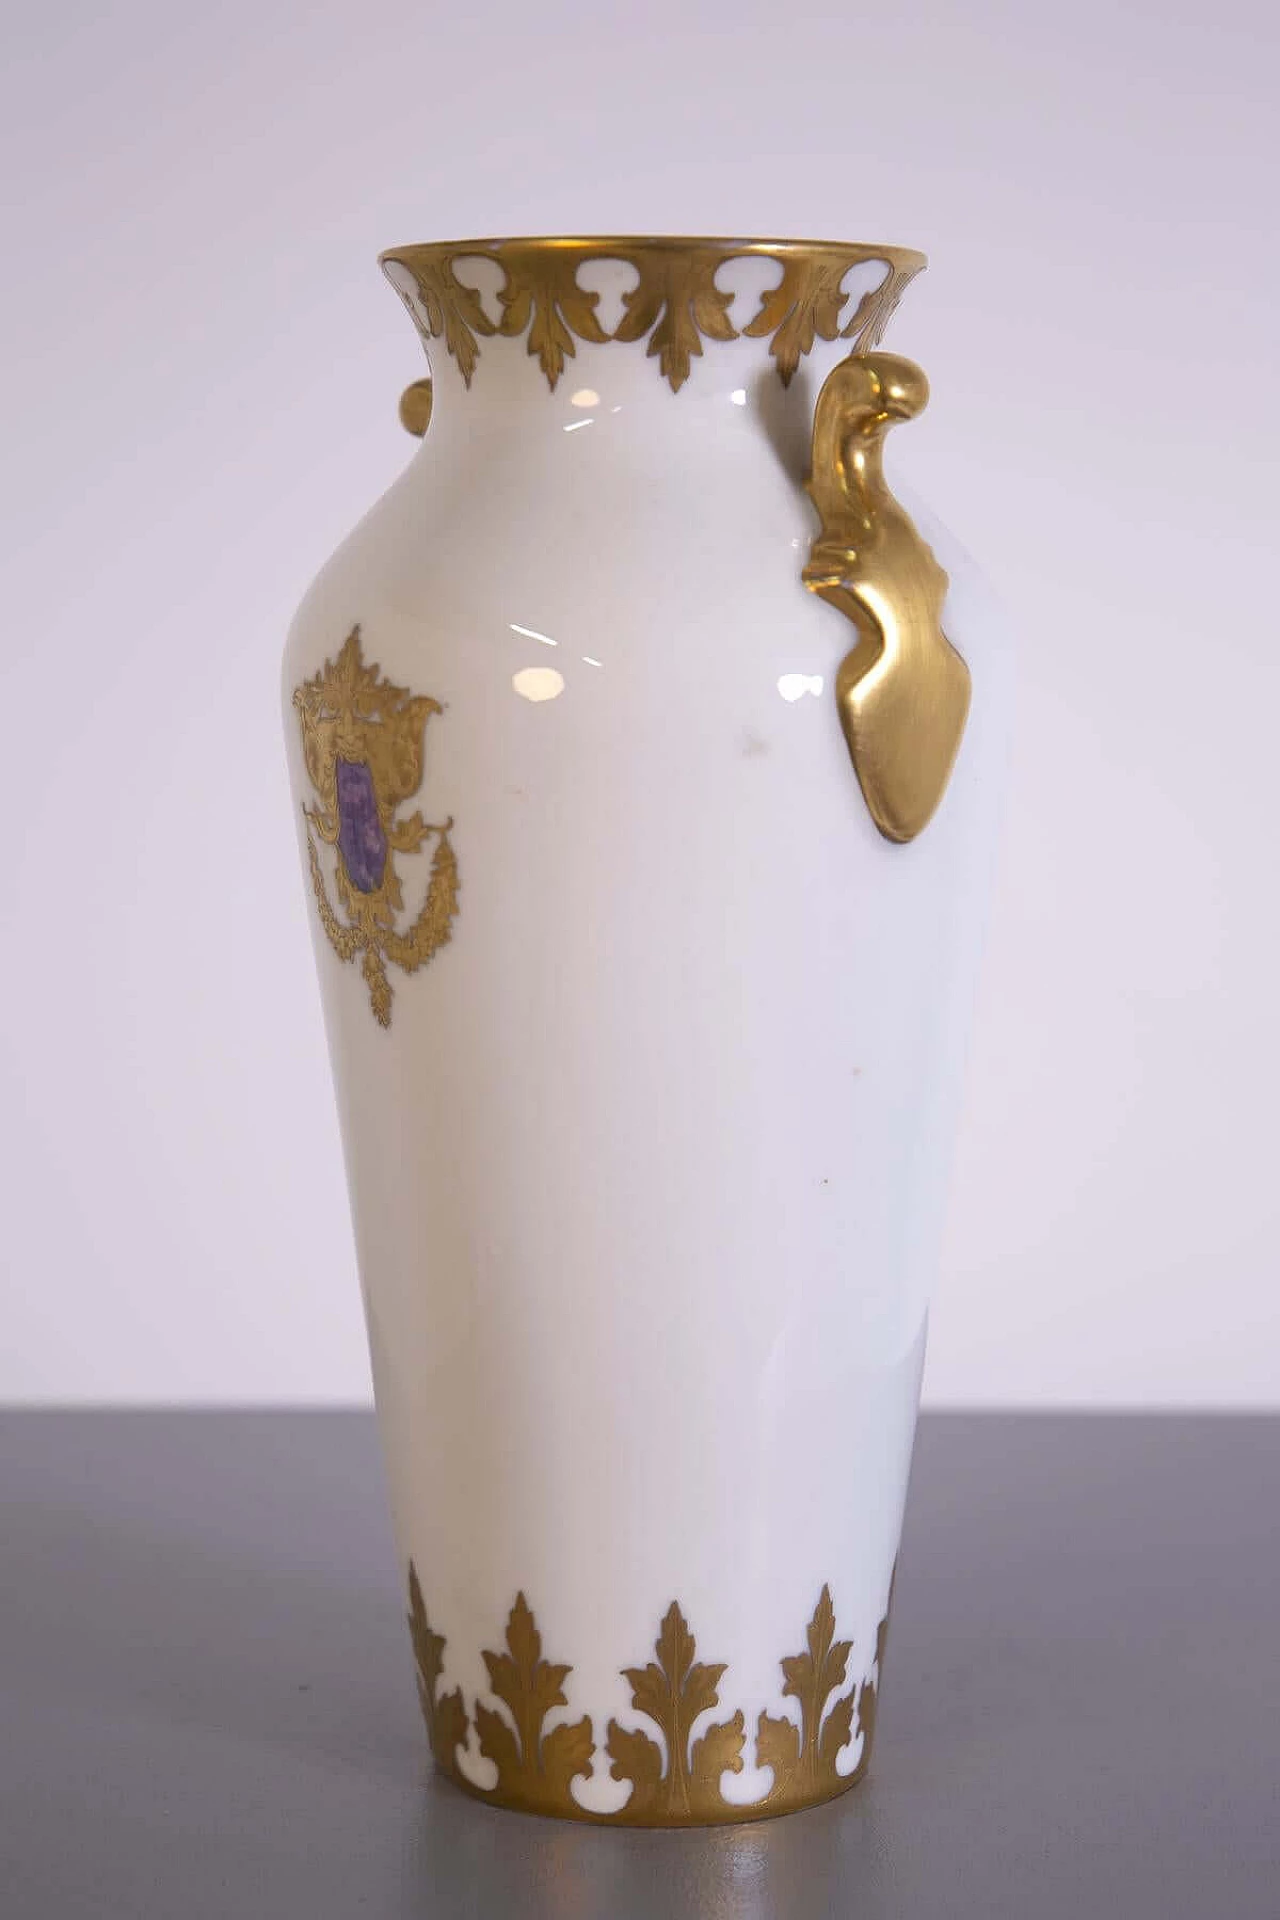 Arrigo Finzi's porcelain vase, painted in gold, 1950s 1408464